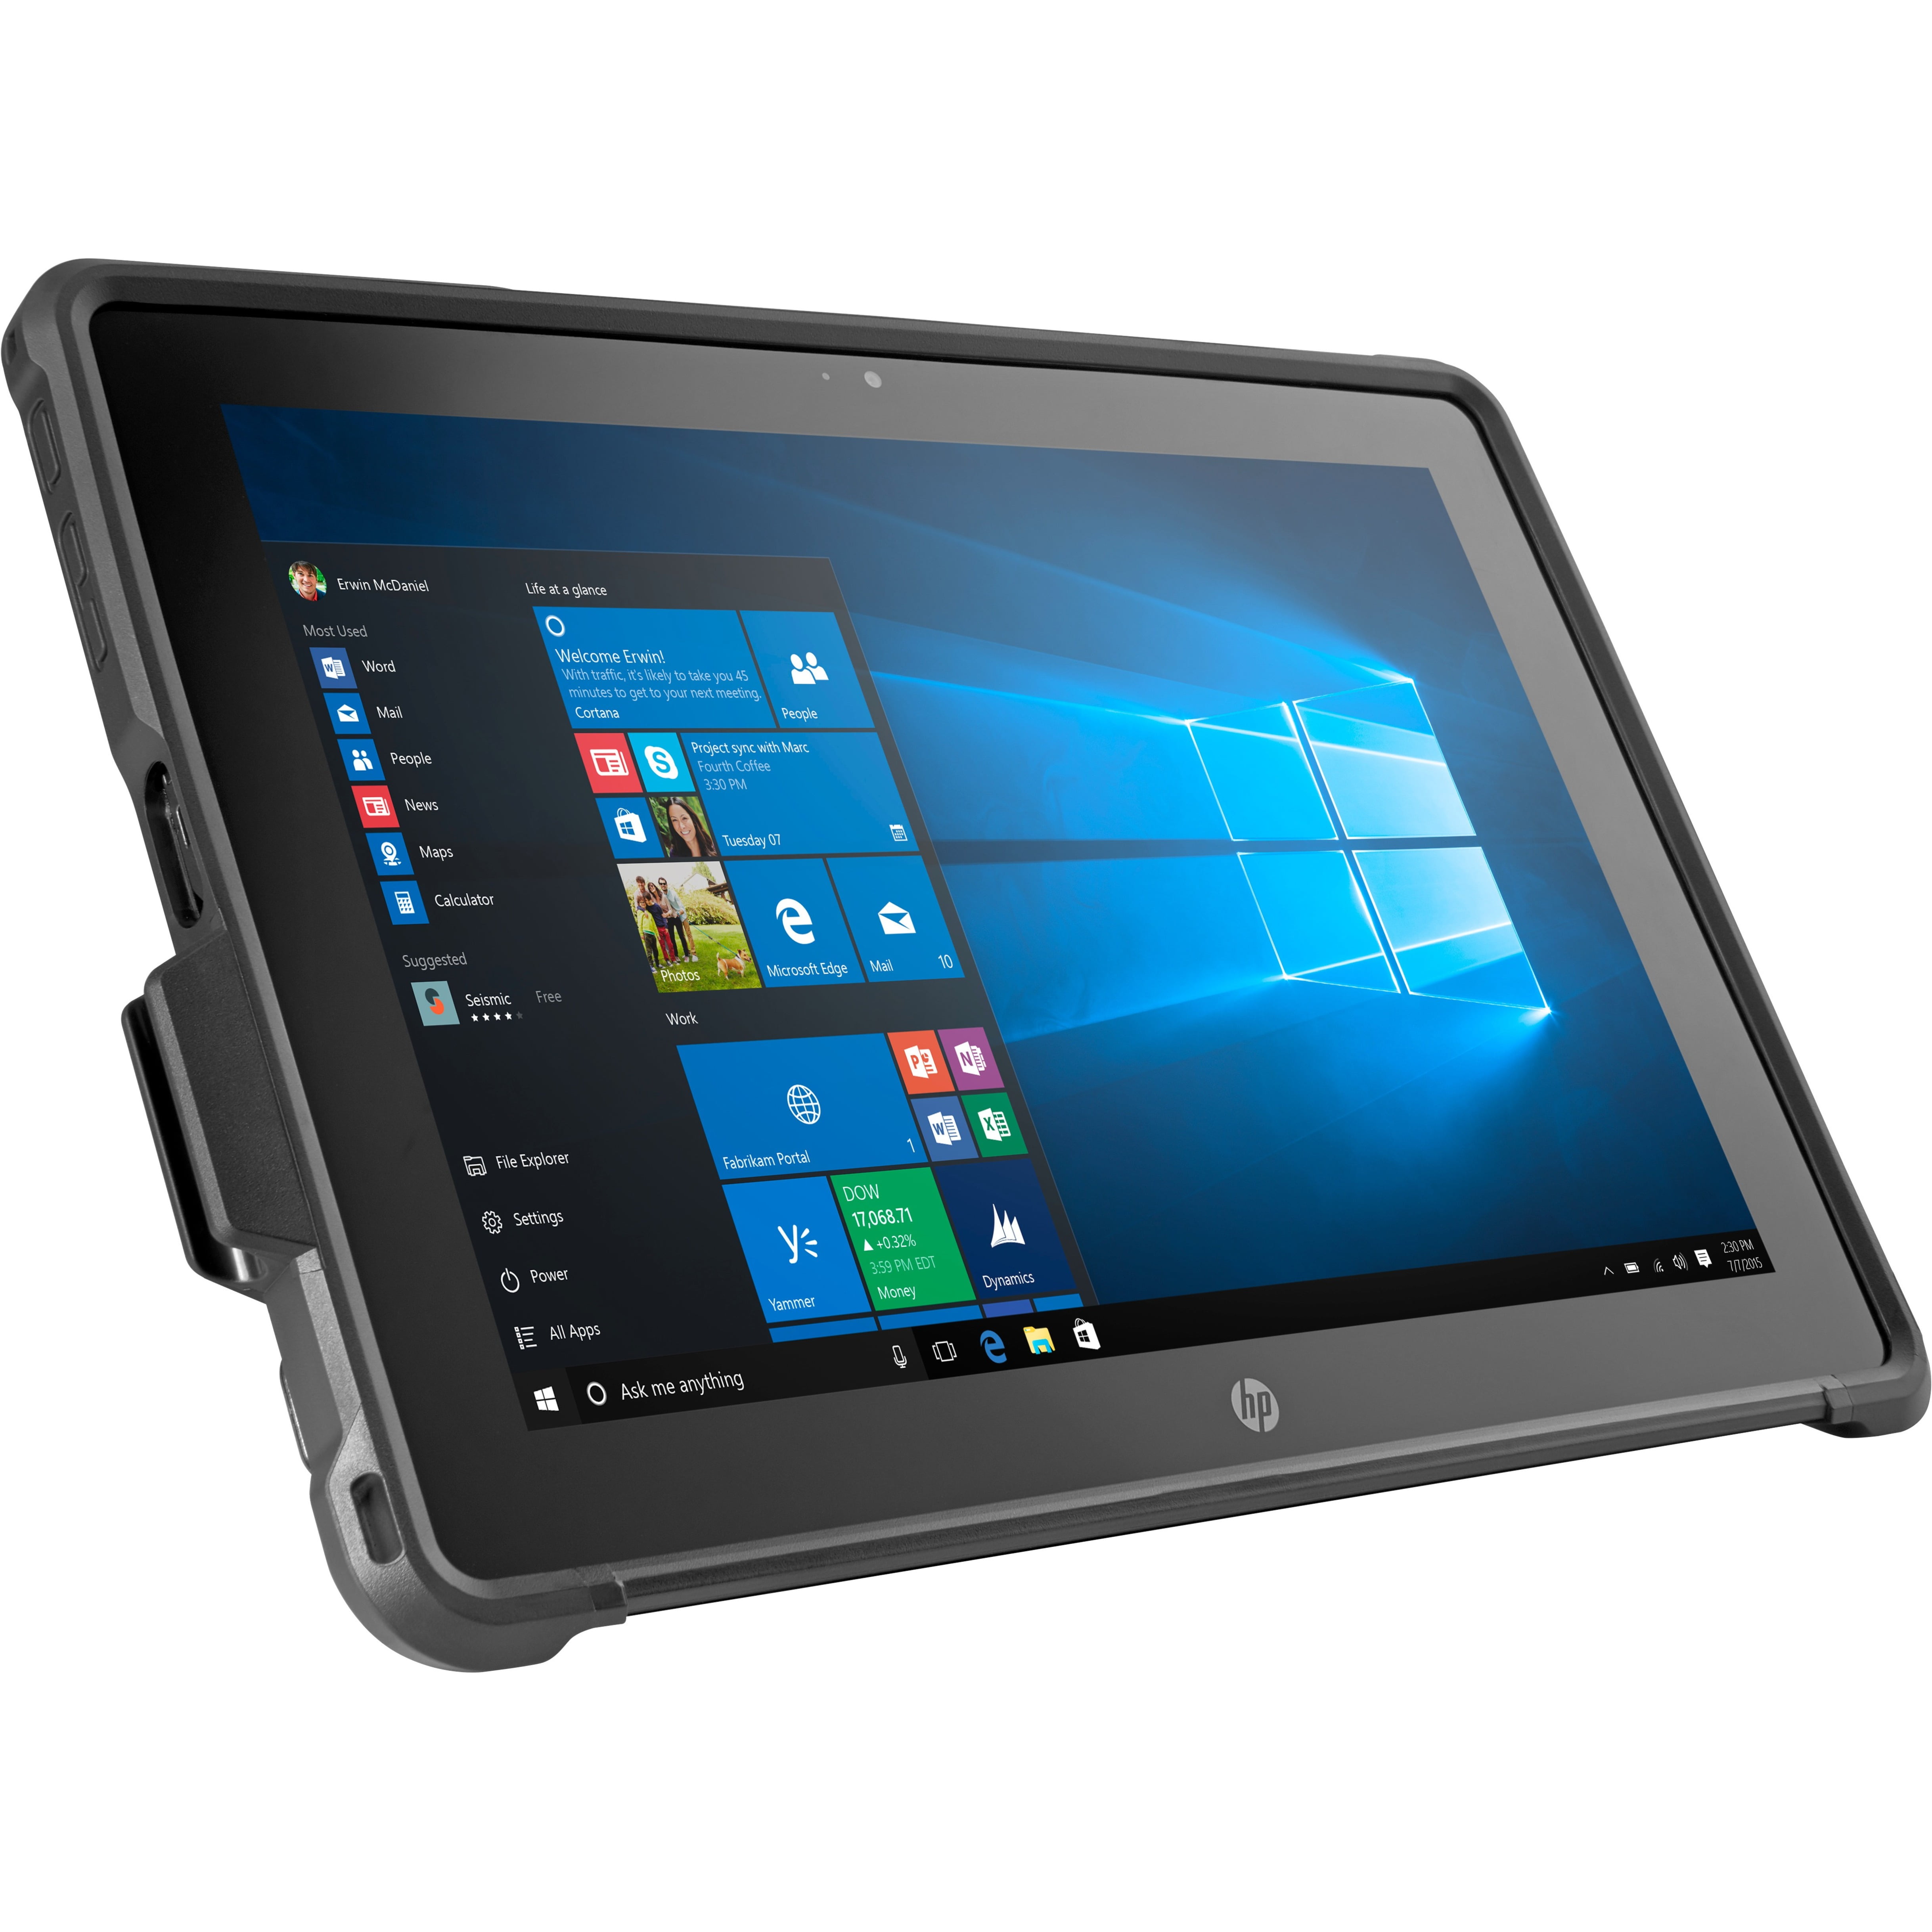 HP Pro x2 612 G2 Tablet, 12